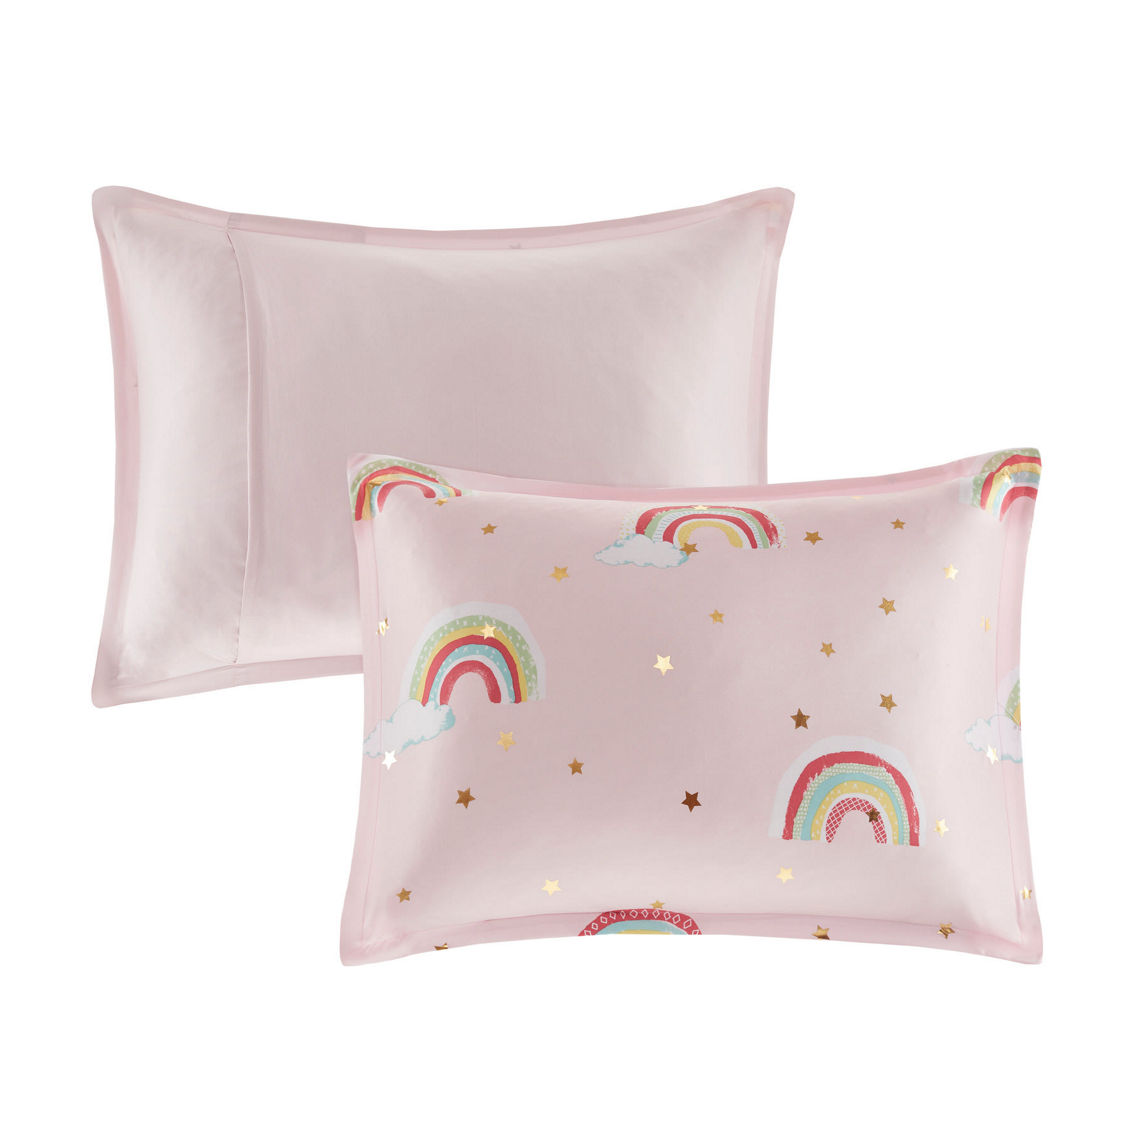 Mi Zone Kids Mia Rainbow and Metallic Stars Comforter Set with Bed Sheets - Image 2 of 5